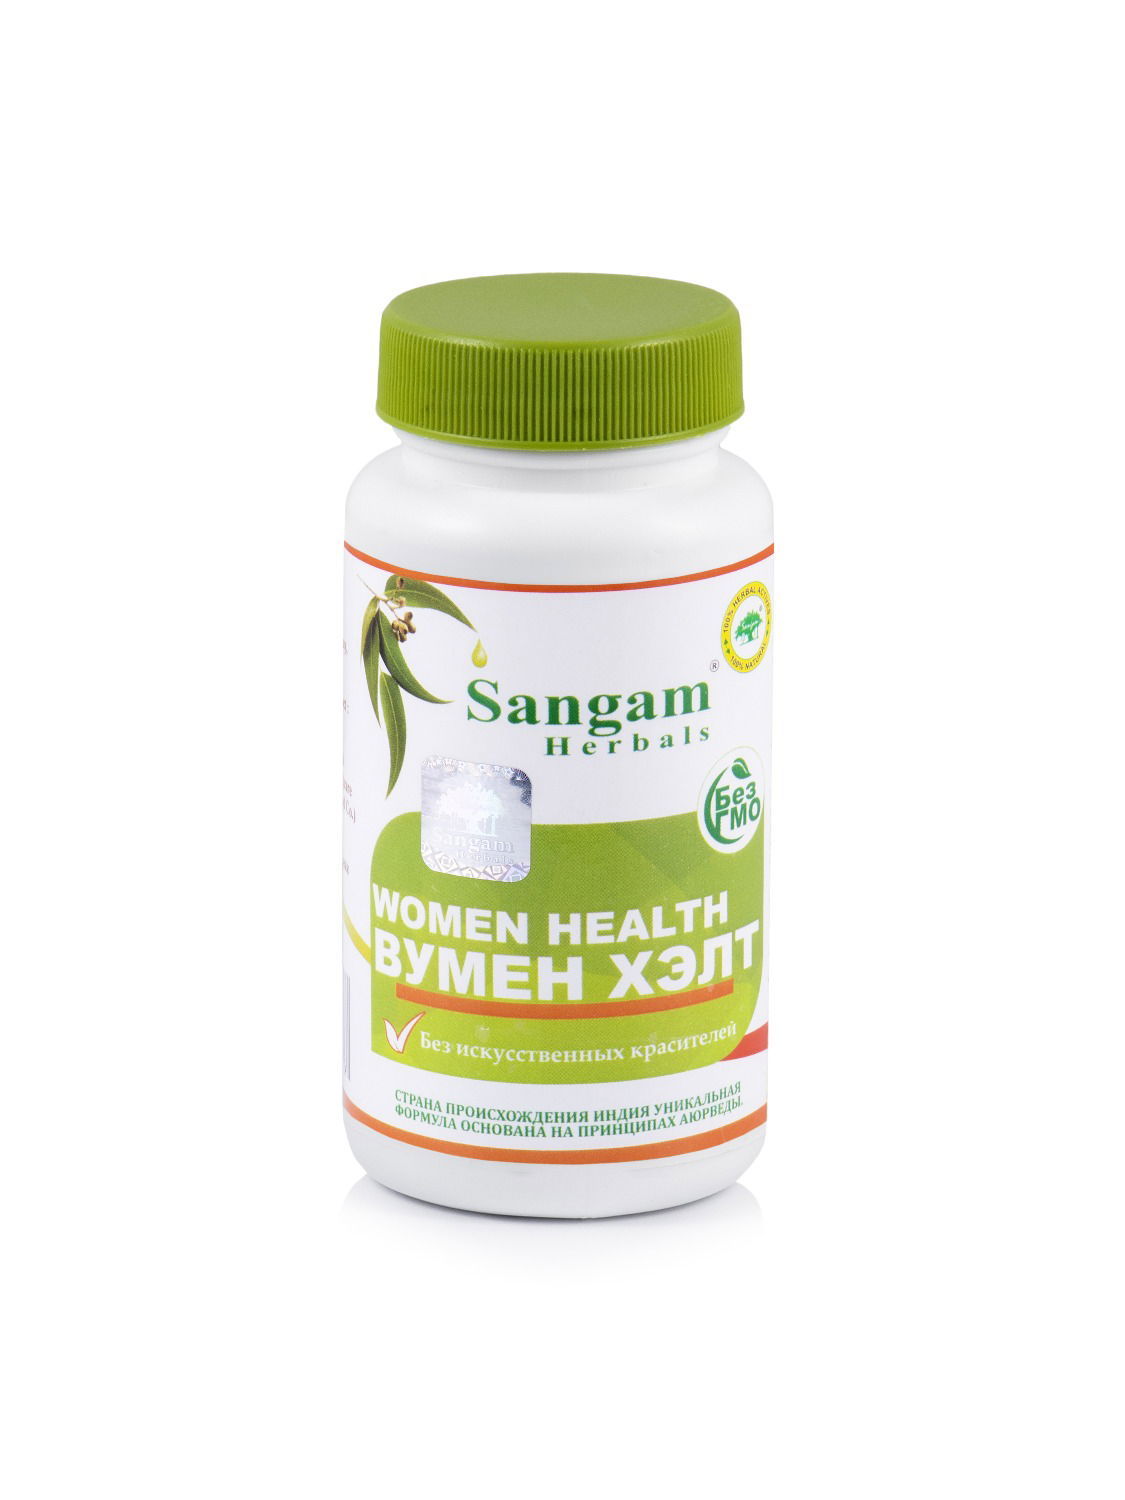 Вумен Хэлт Sangam Herbals (60 таблеток). 